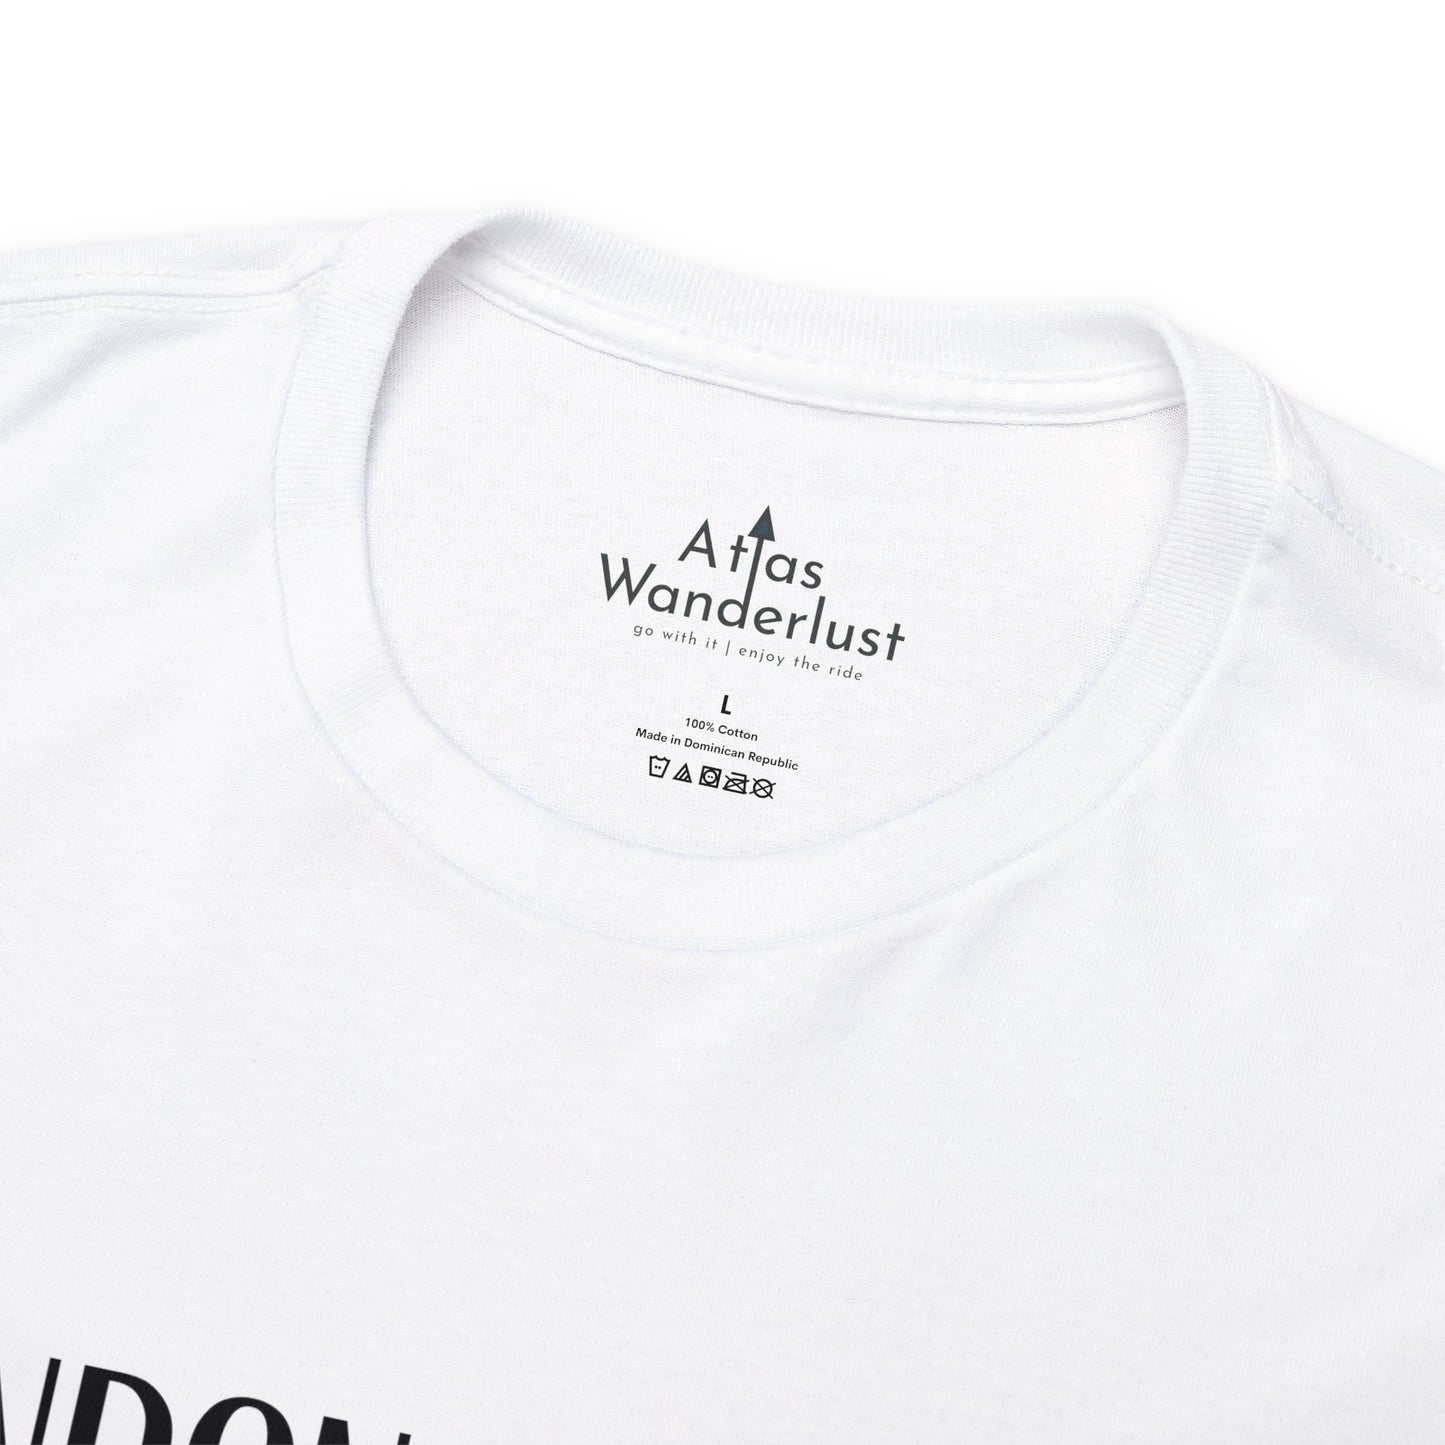 London England Coordinates T-Shirt, Modern Angophile Tee